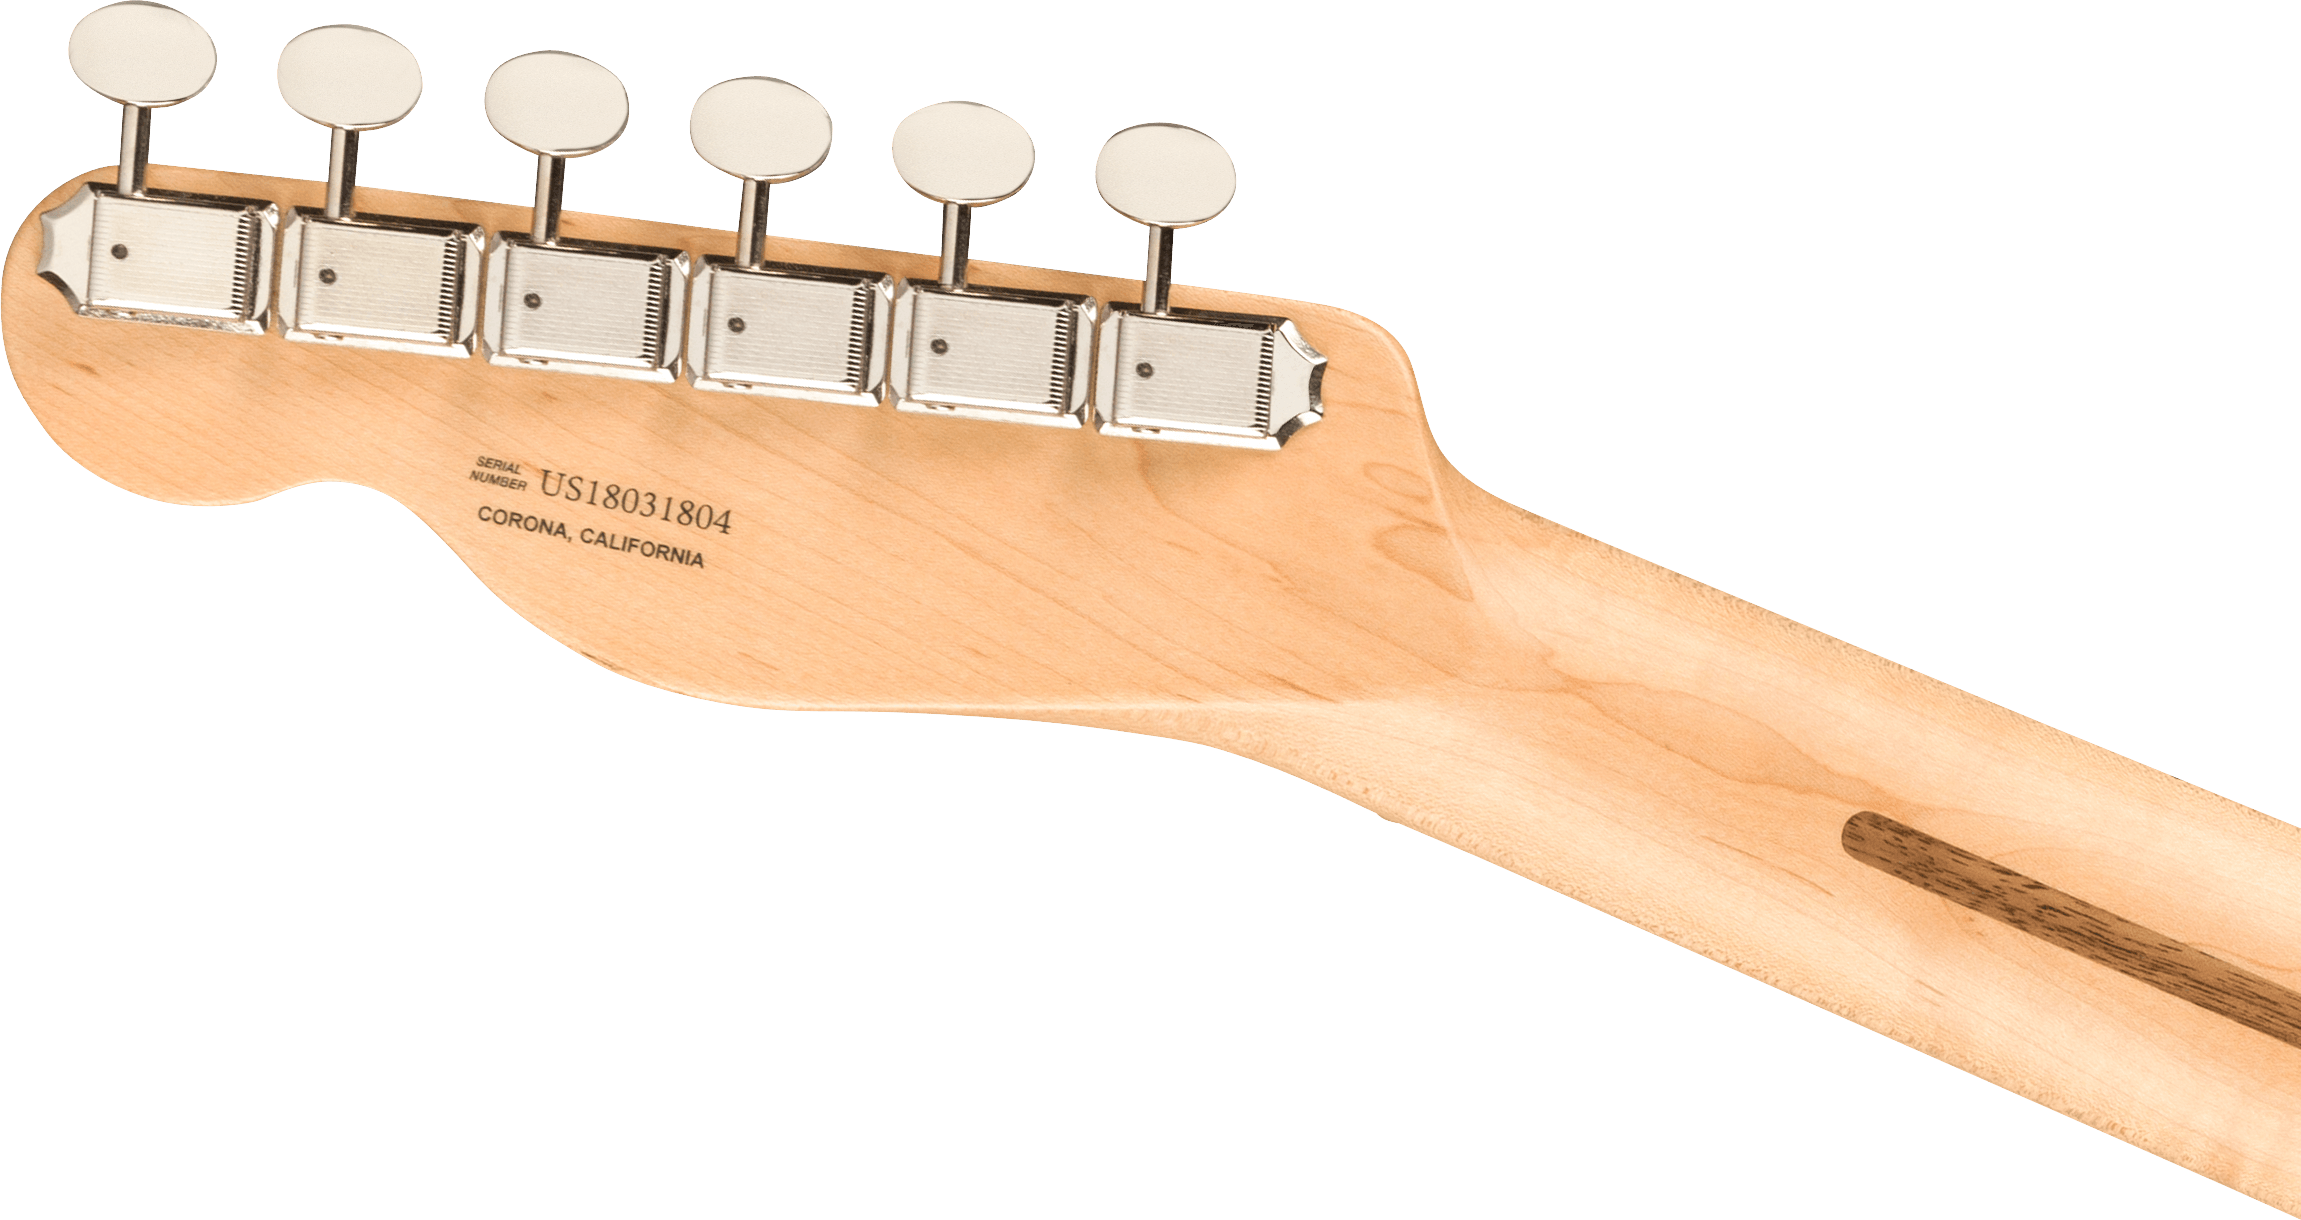 Fender American Performer Telecaster® with Humbucking, Maple Fingerboard, 3-Color Sunburst